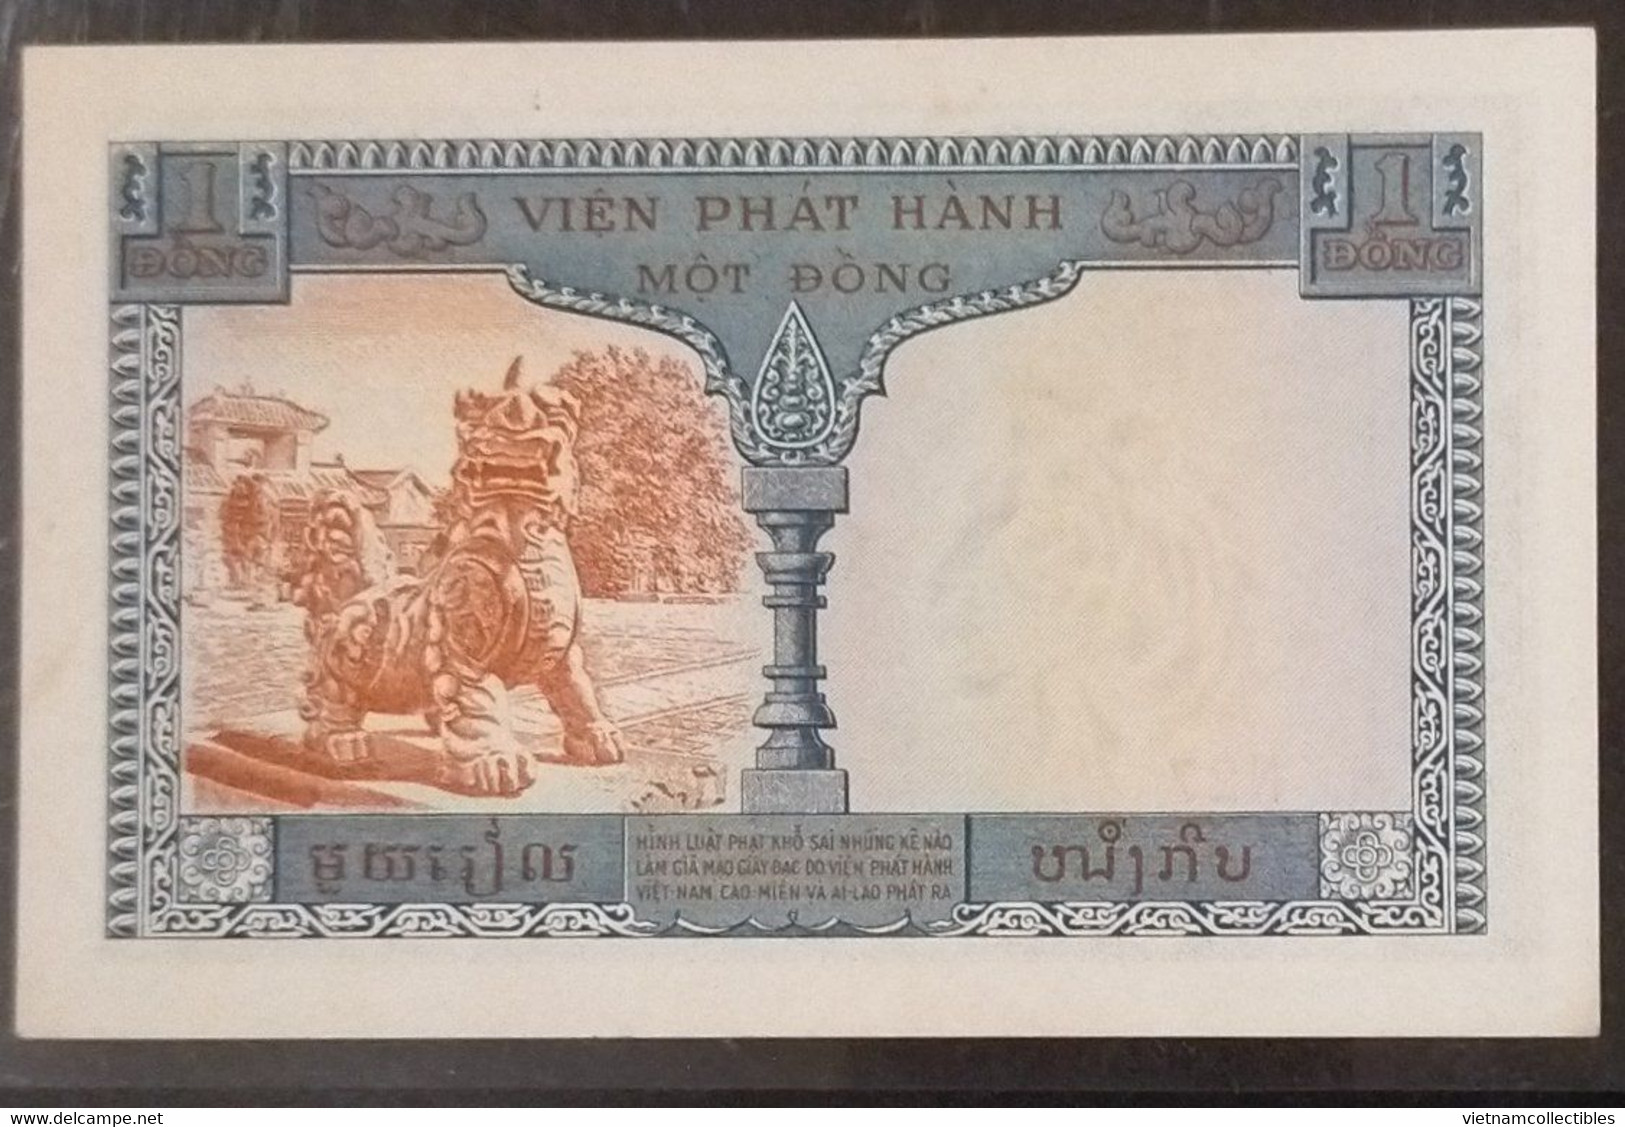 Indochine Indochina Vietnam Viet Nam Laos Cambodia 1 Piastre UNC Banknote Note 1954 - Pick # 105 / 2 Photos - Indochina